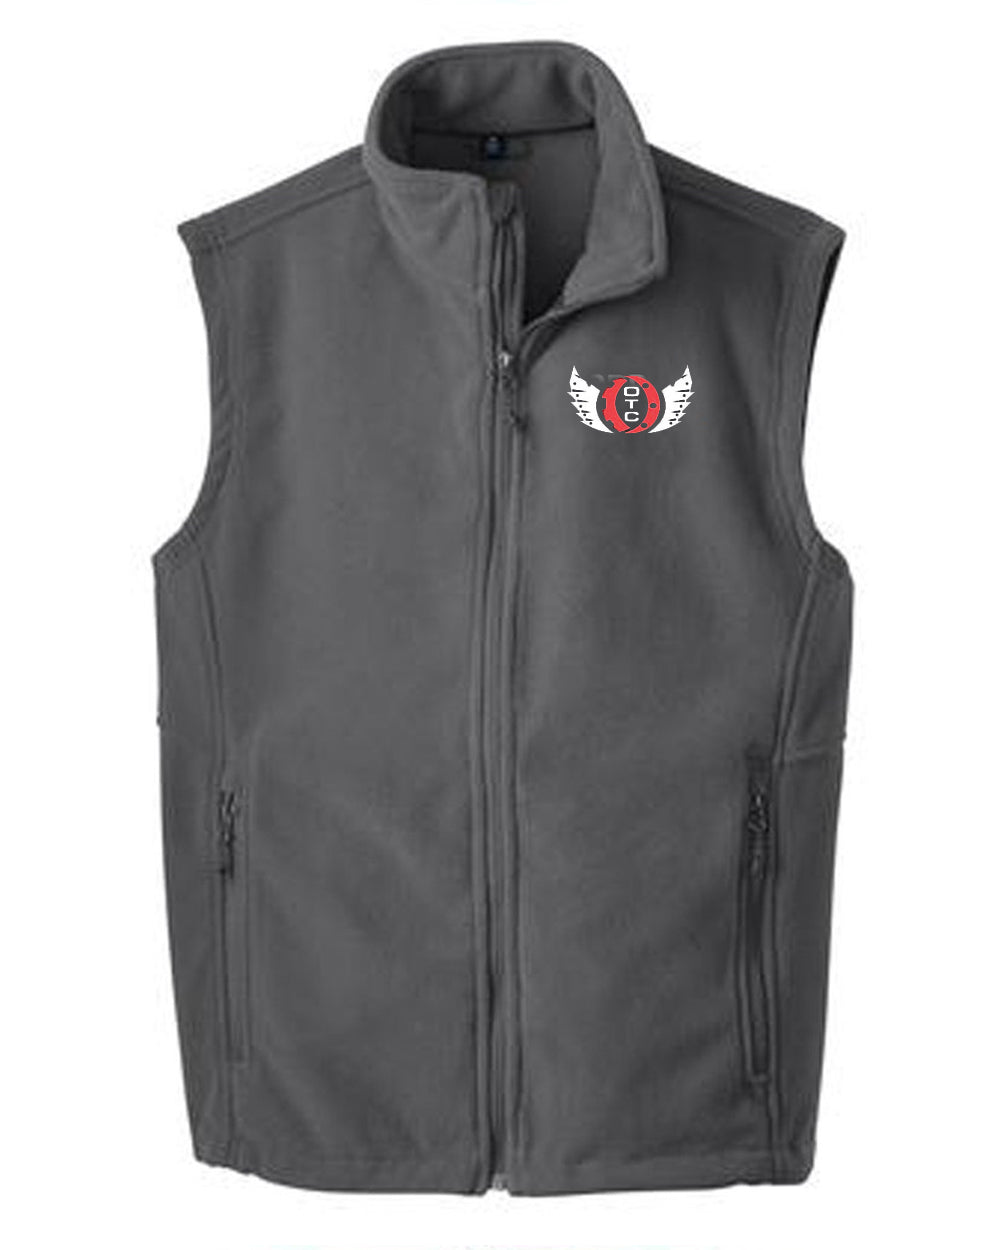 Ohio Tech Fleece Vest